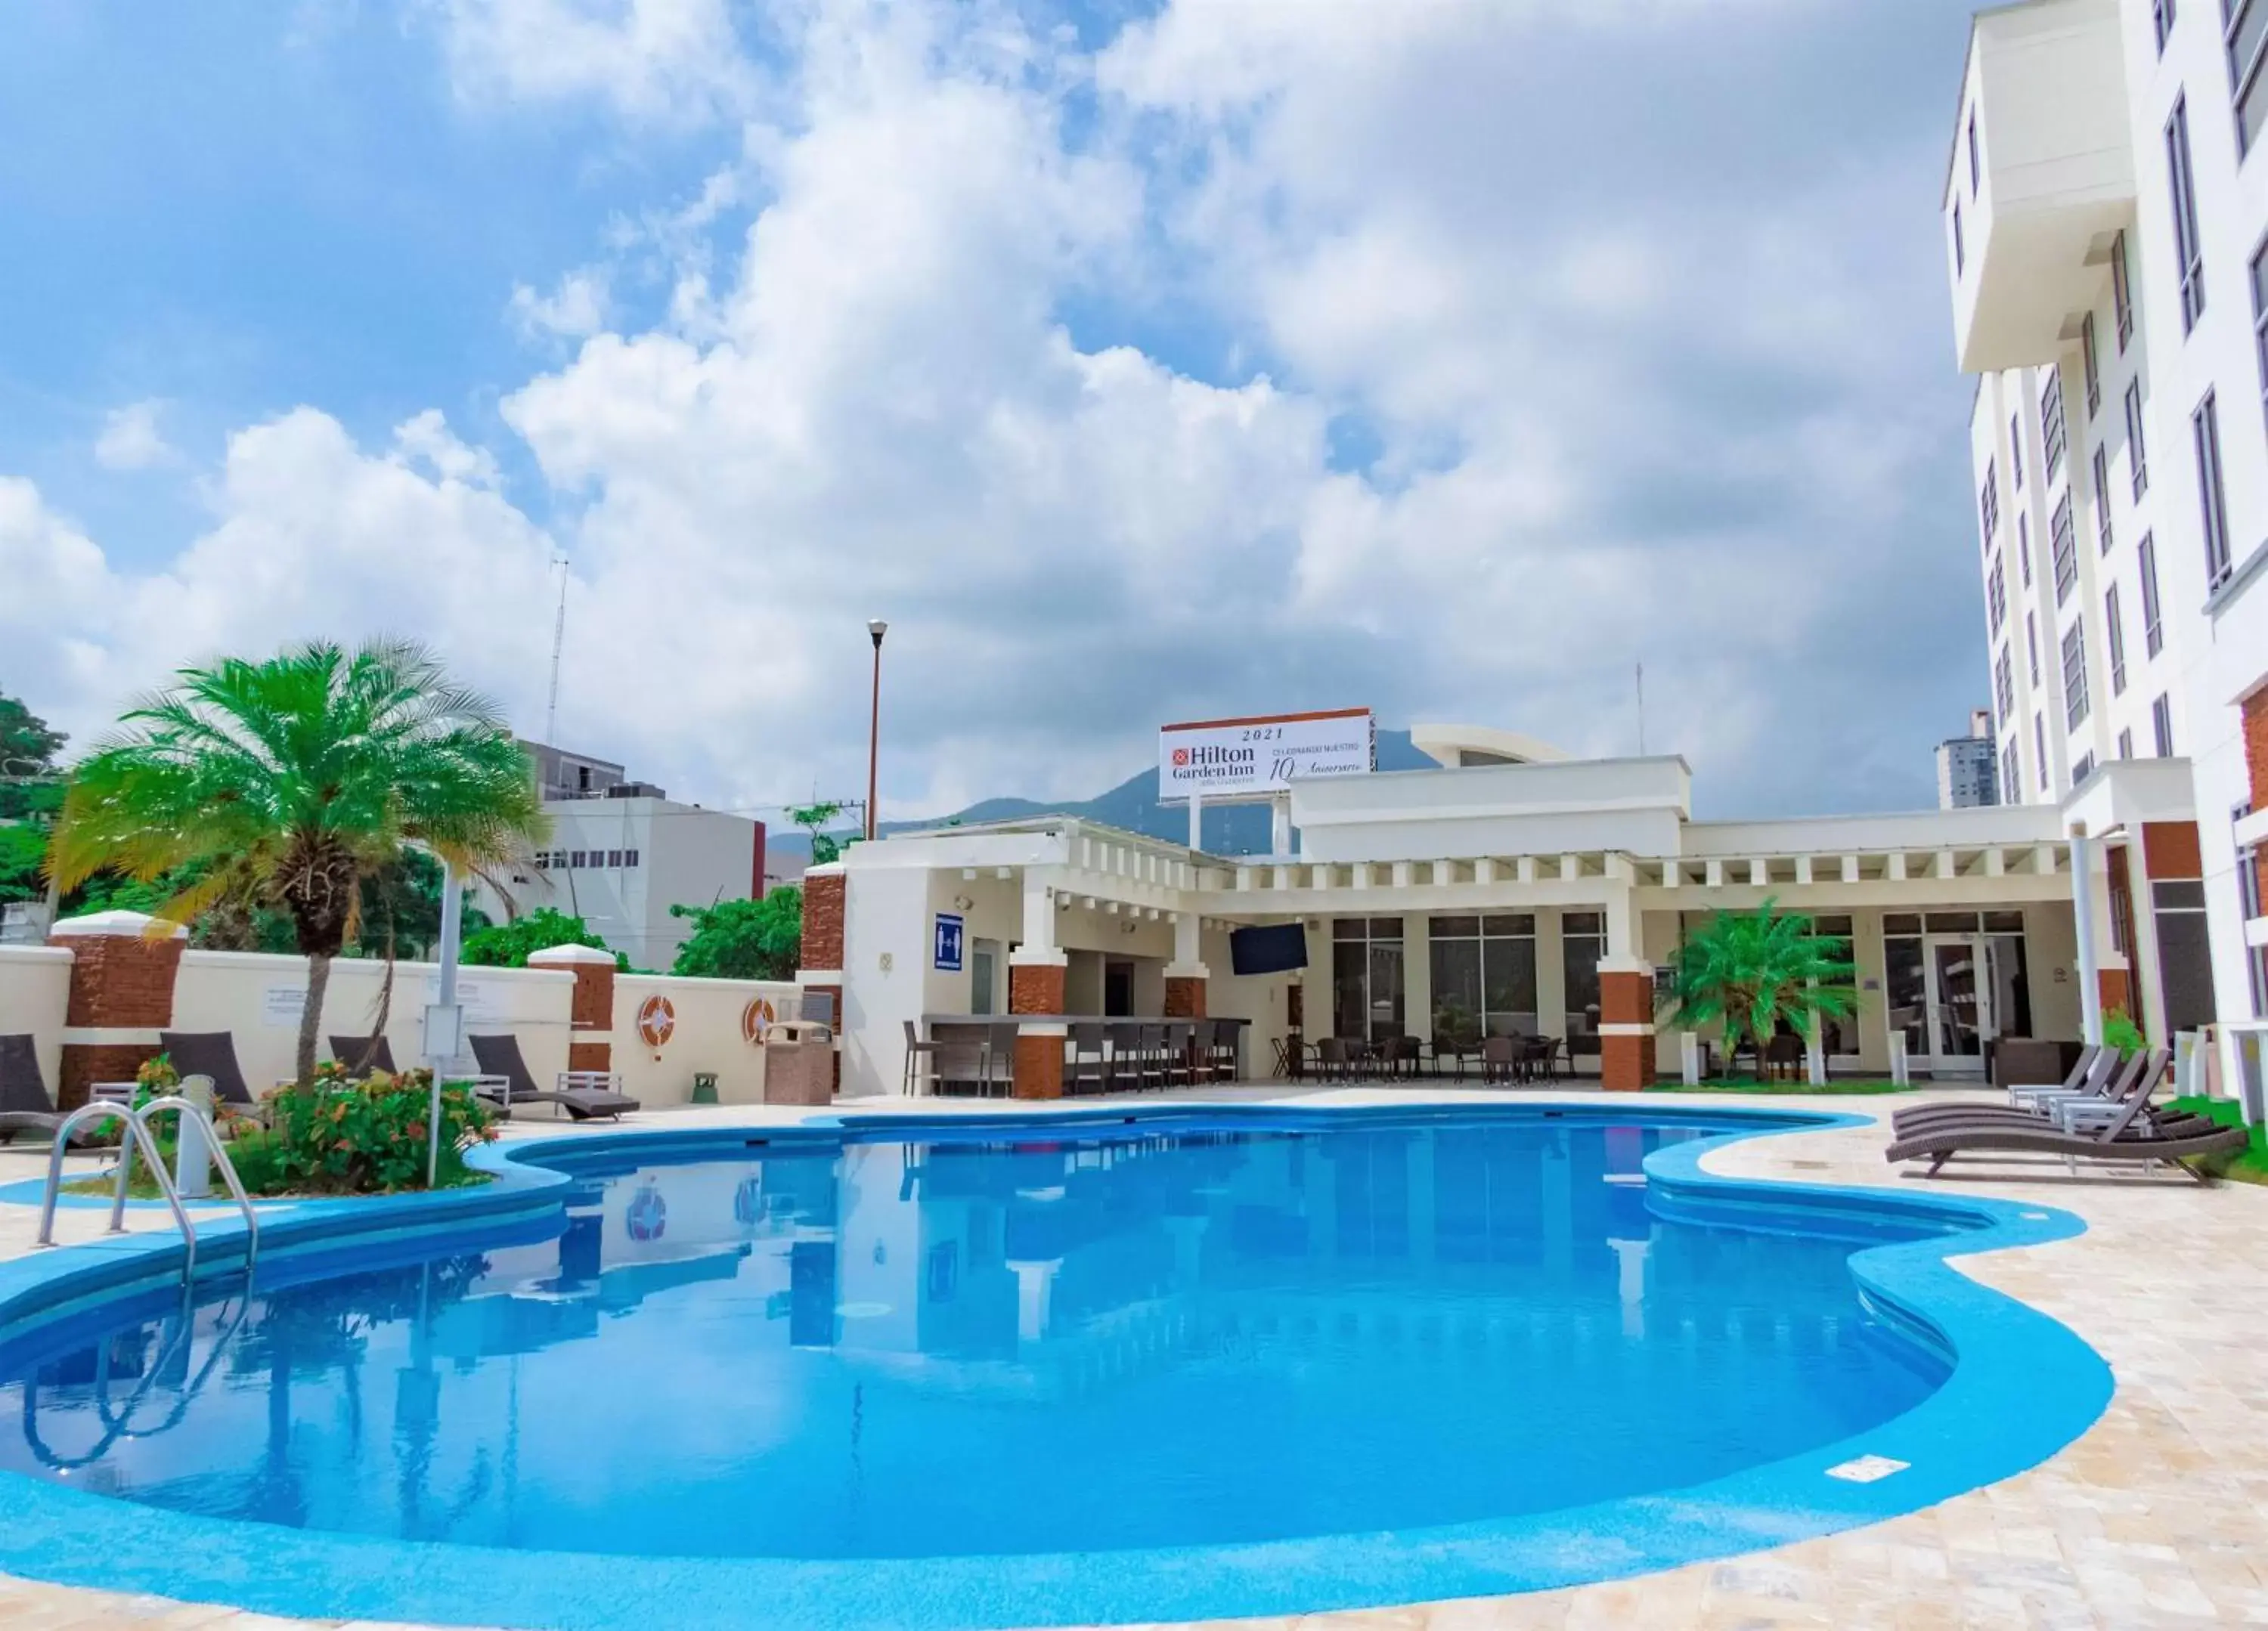 Swimming Pool in Hilton Garden Inn Tuxtla Gutierrez